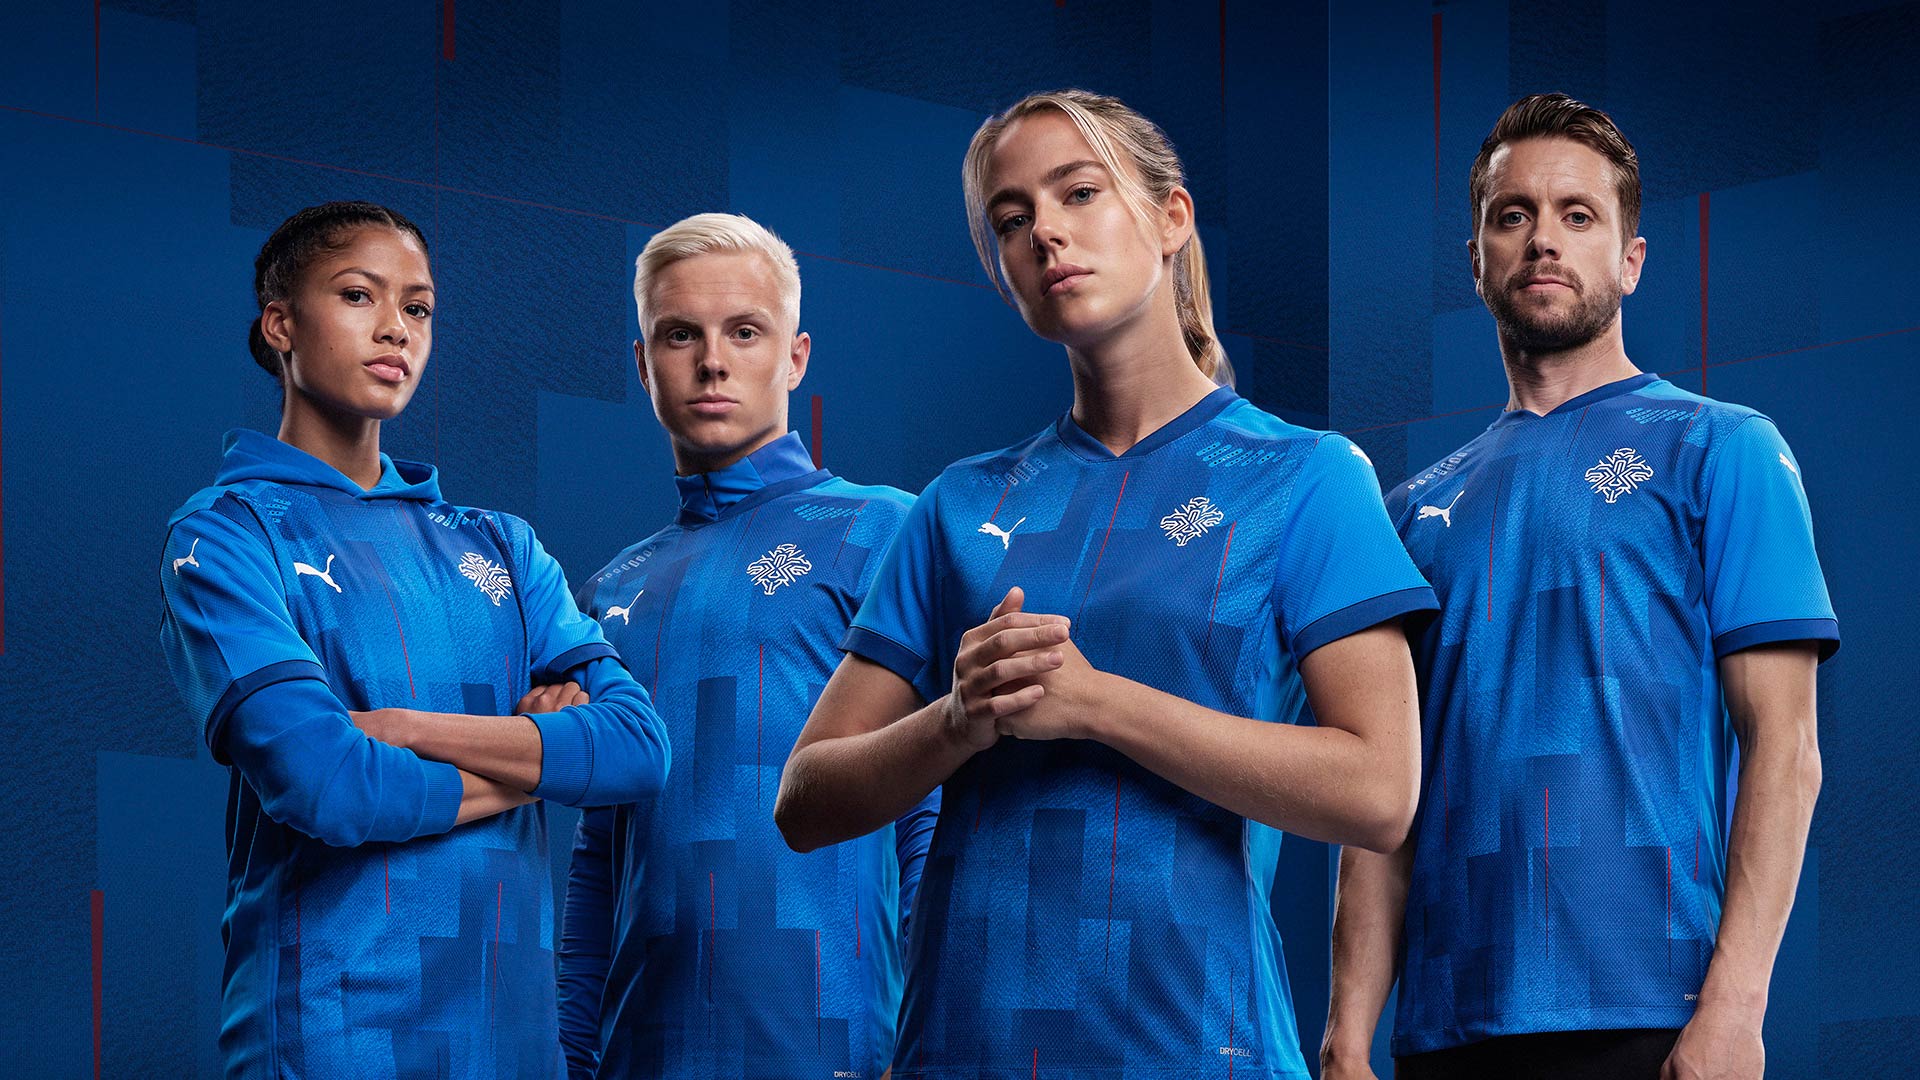 Iceland team members posing in their new uniforms.